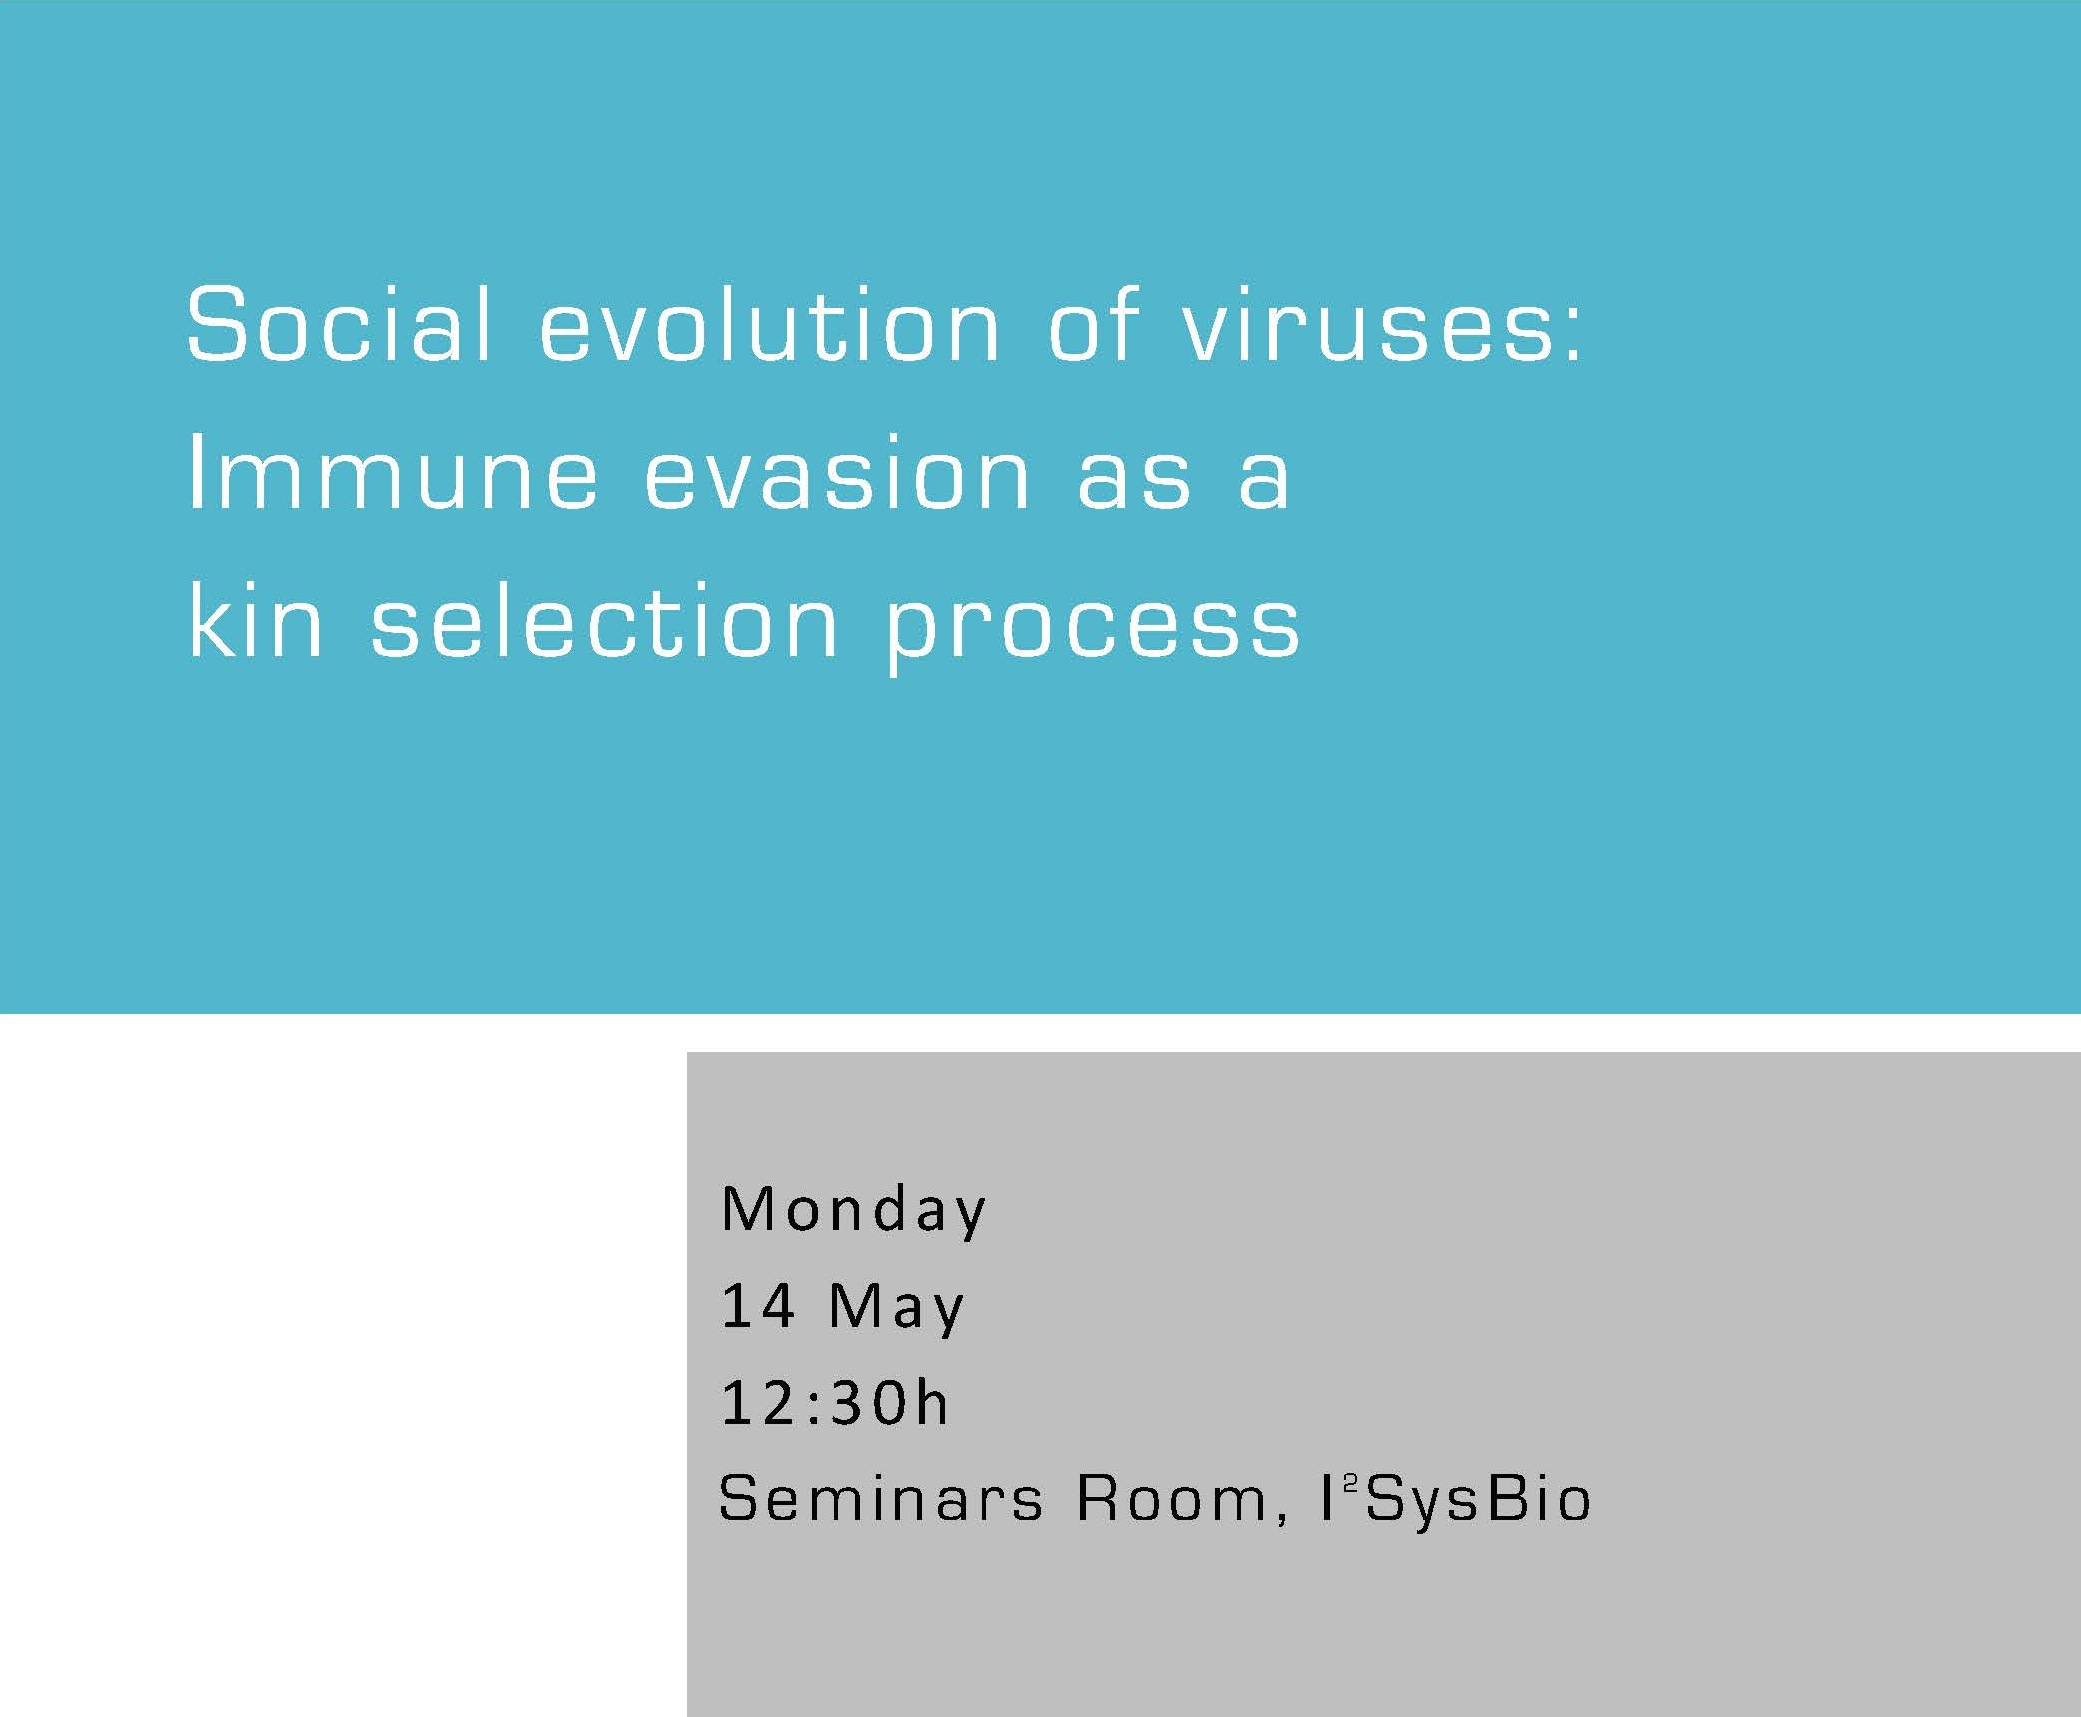 Social evolution of viruses: Immune evasion as a kin selection process